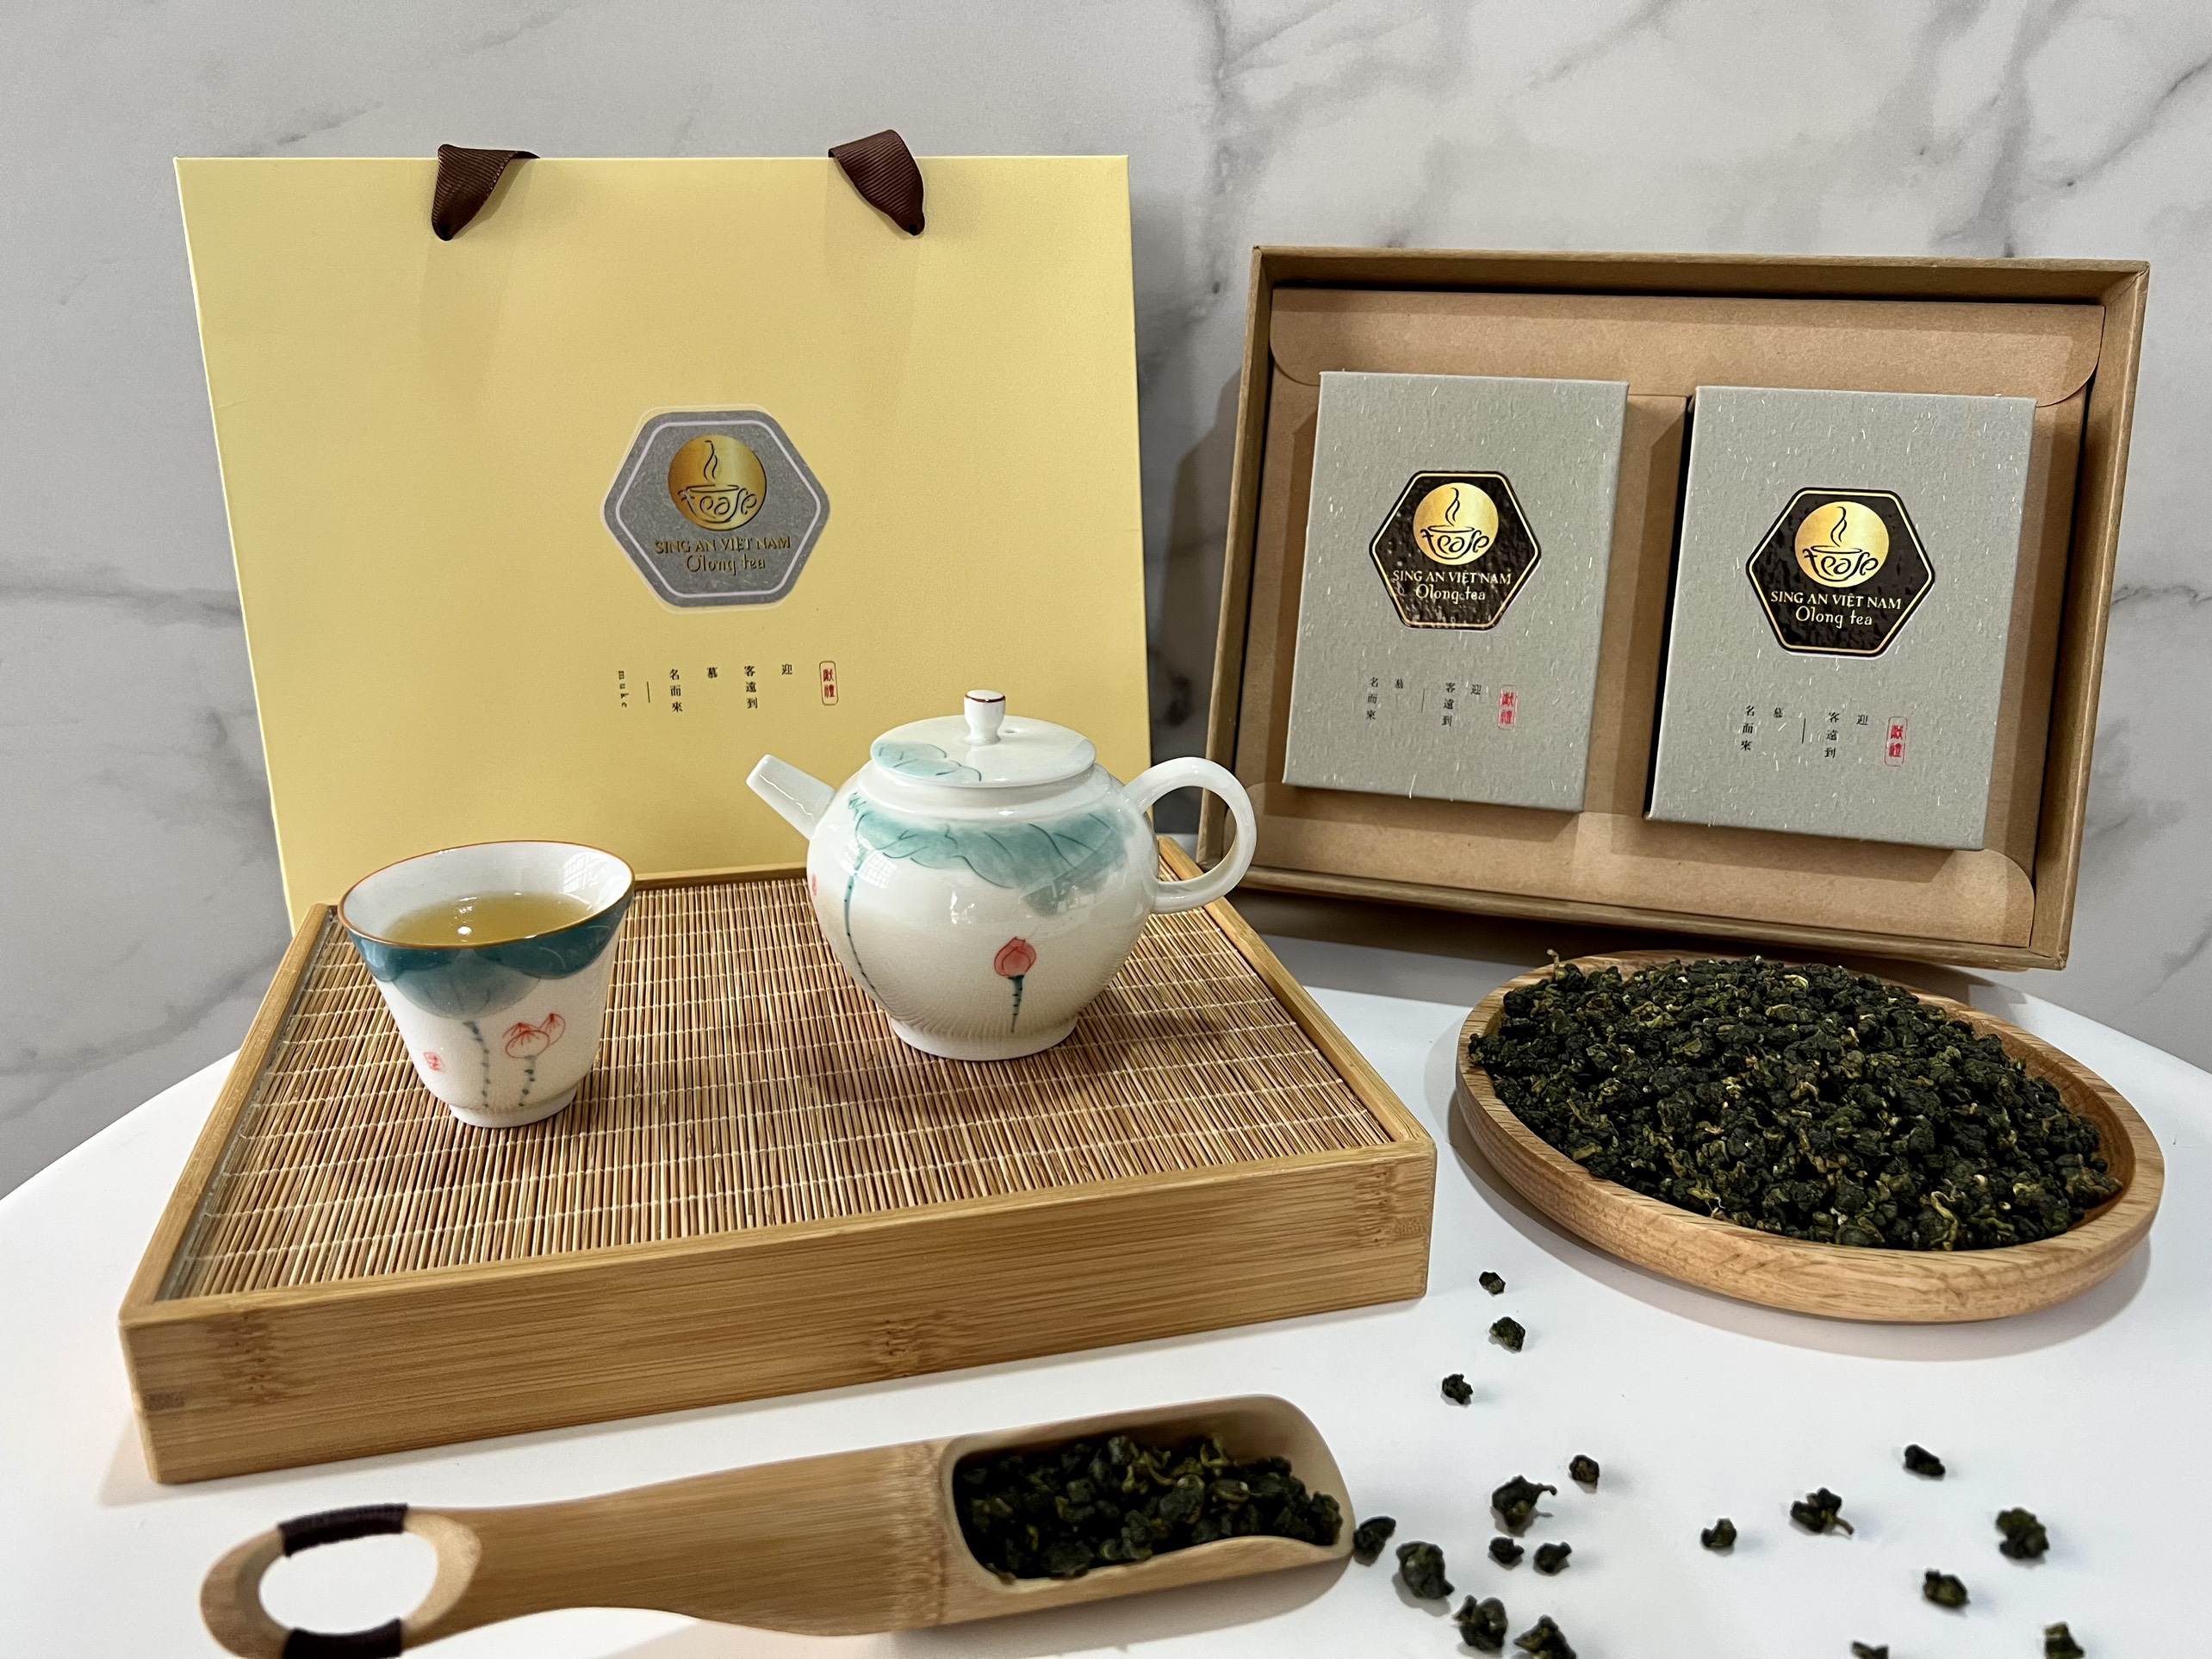 2in1 high-class Kim Tuyen tea (wooden box) - the box lid used as a tea tray